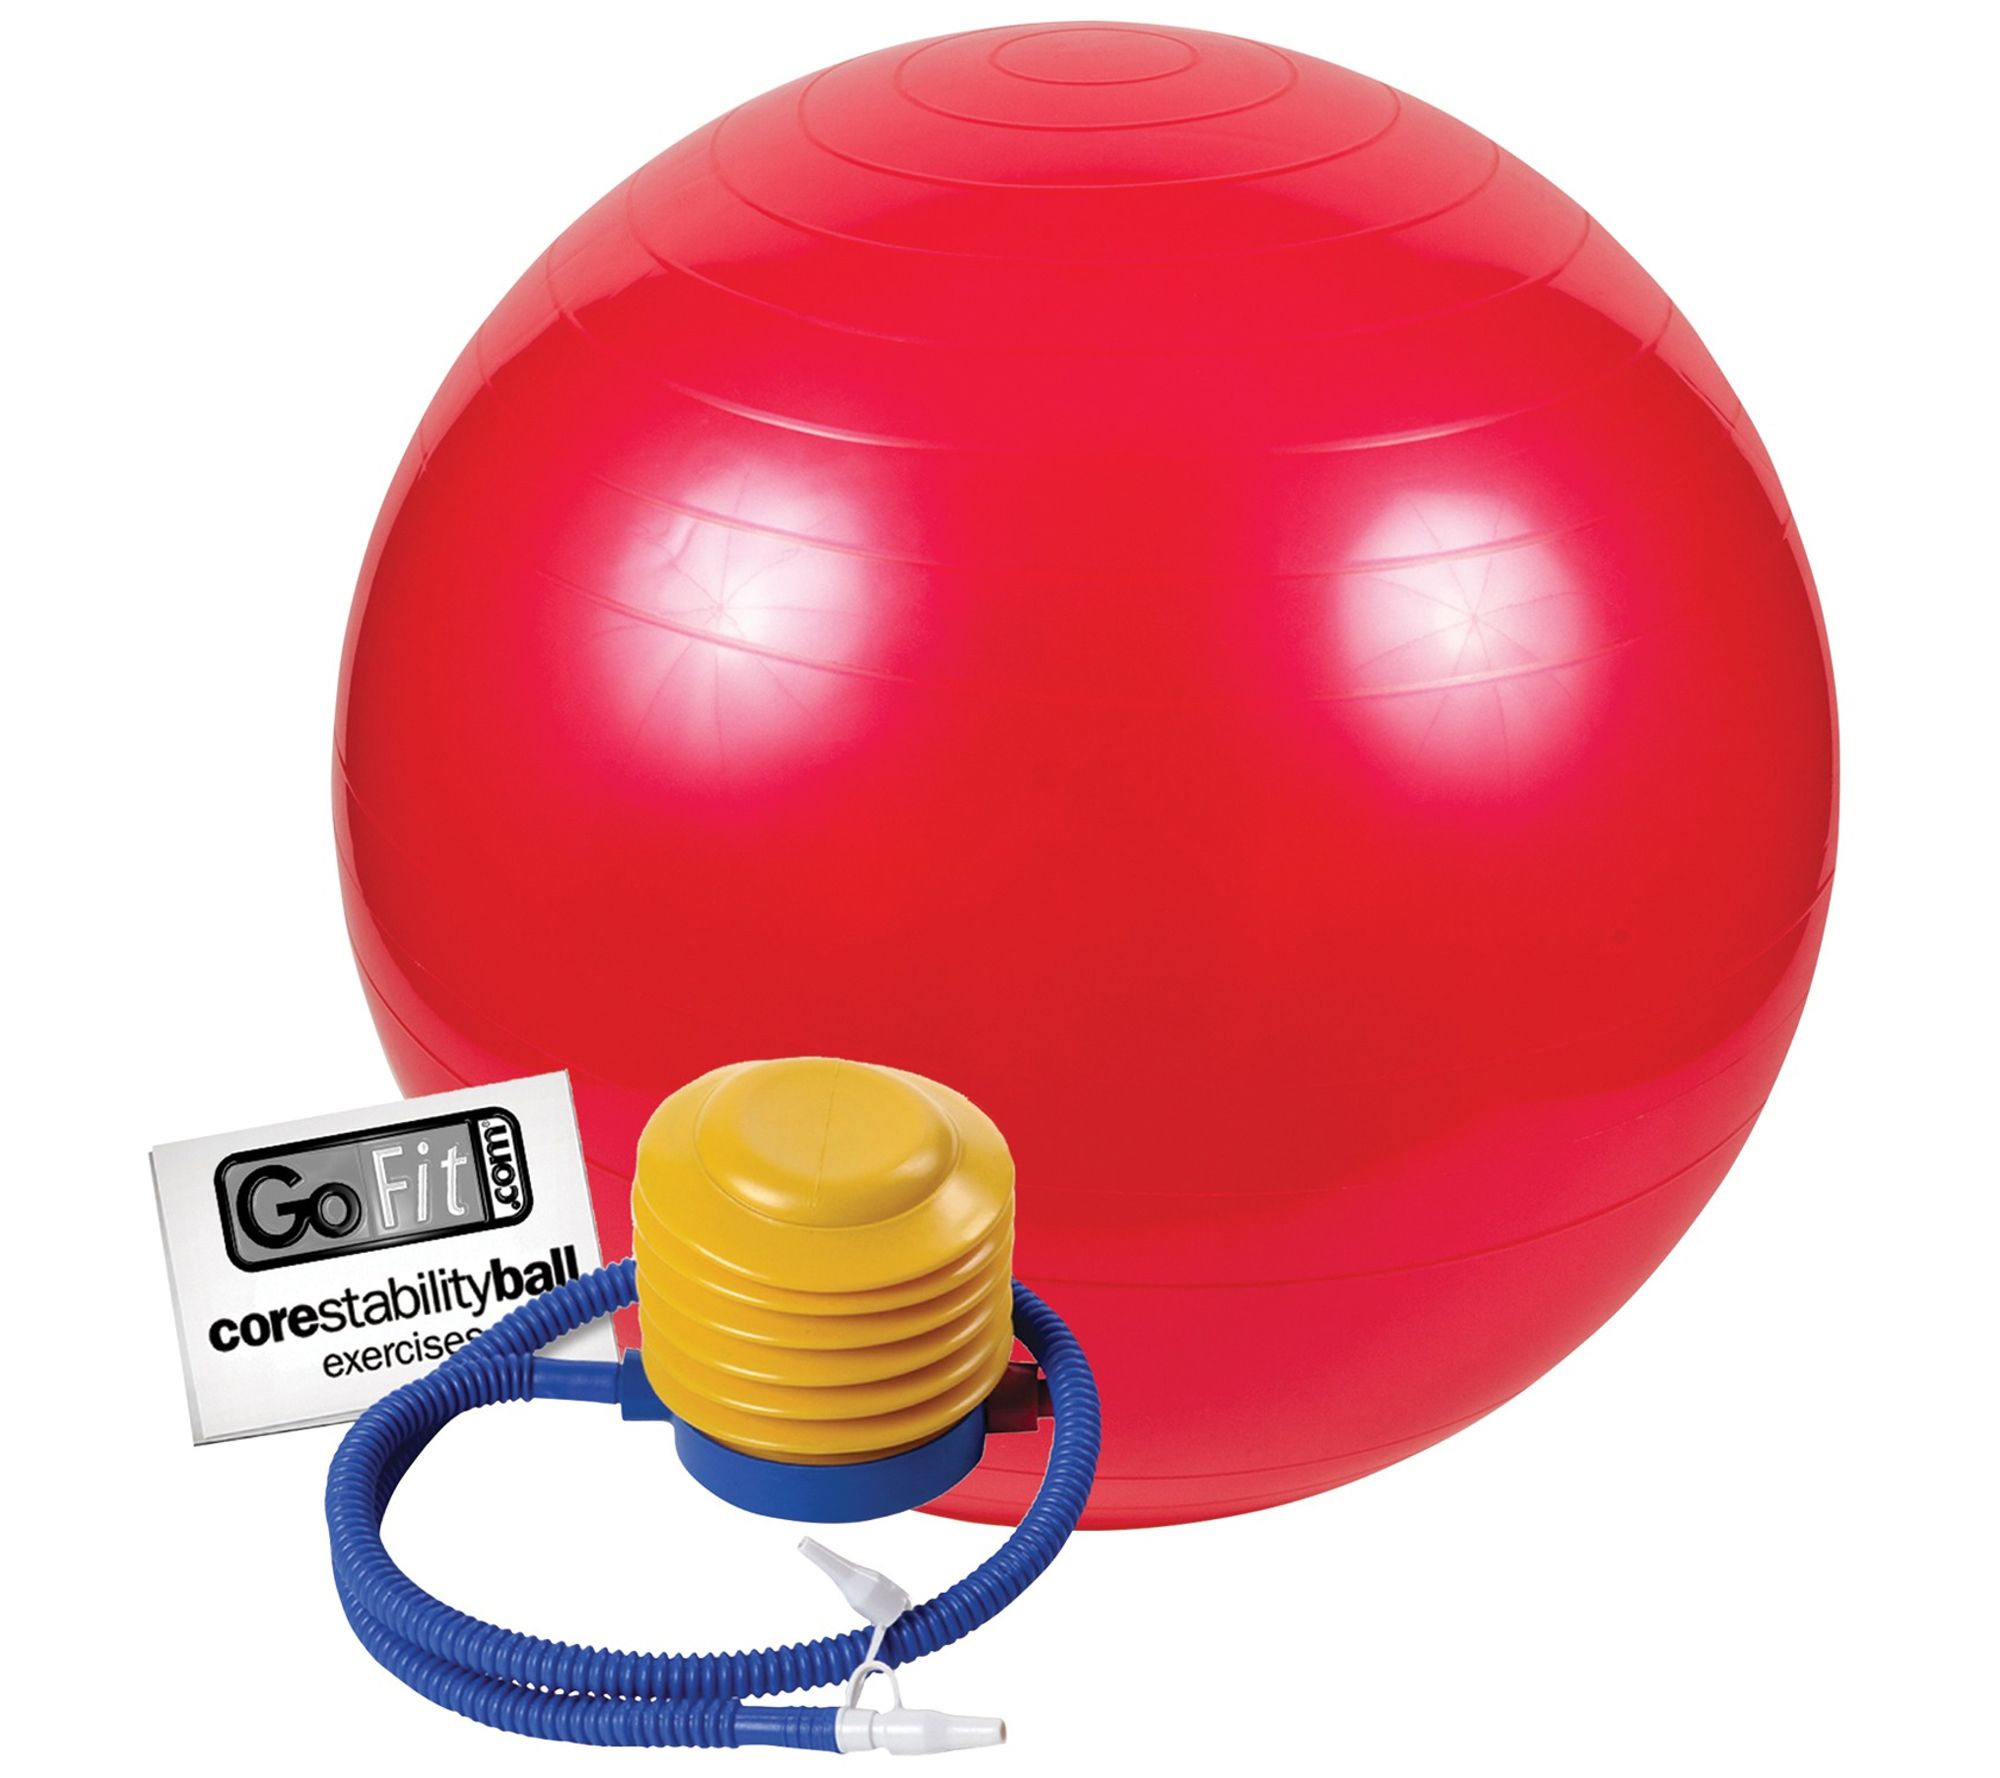 55cm exercise ball